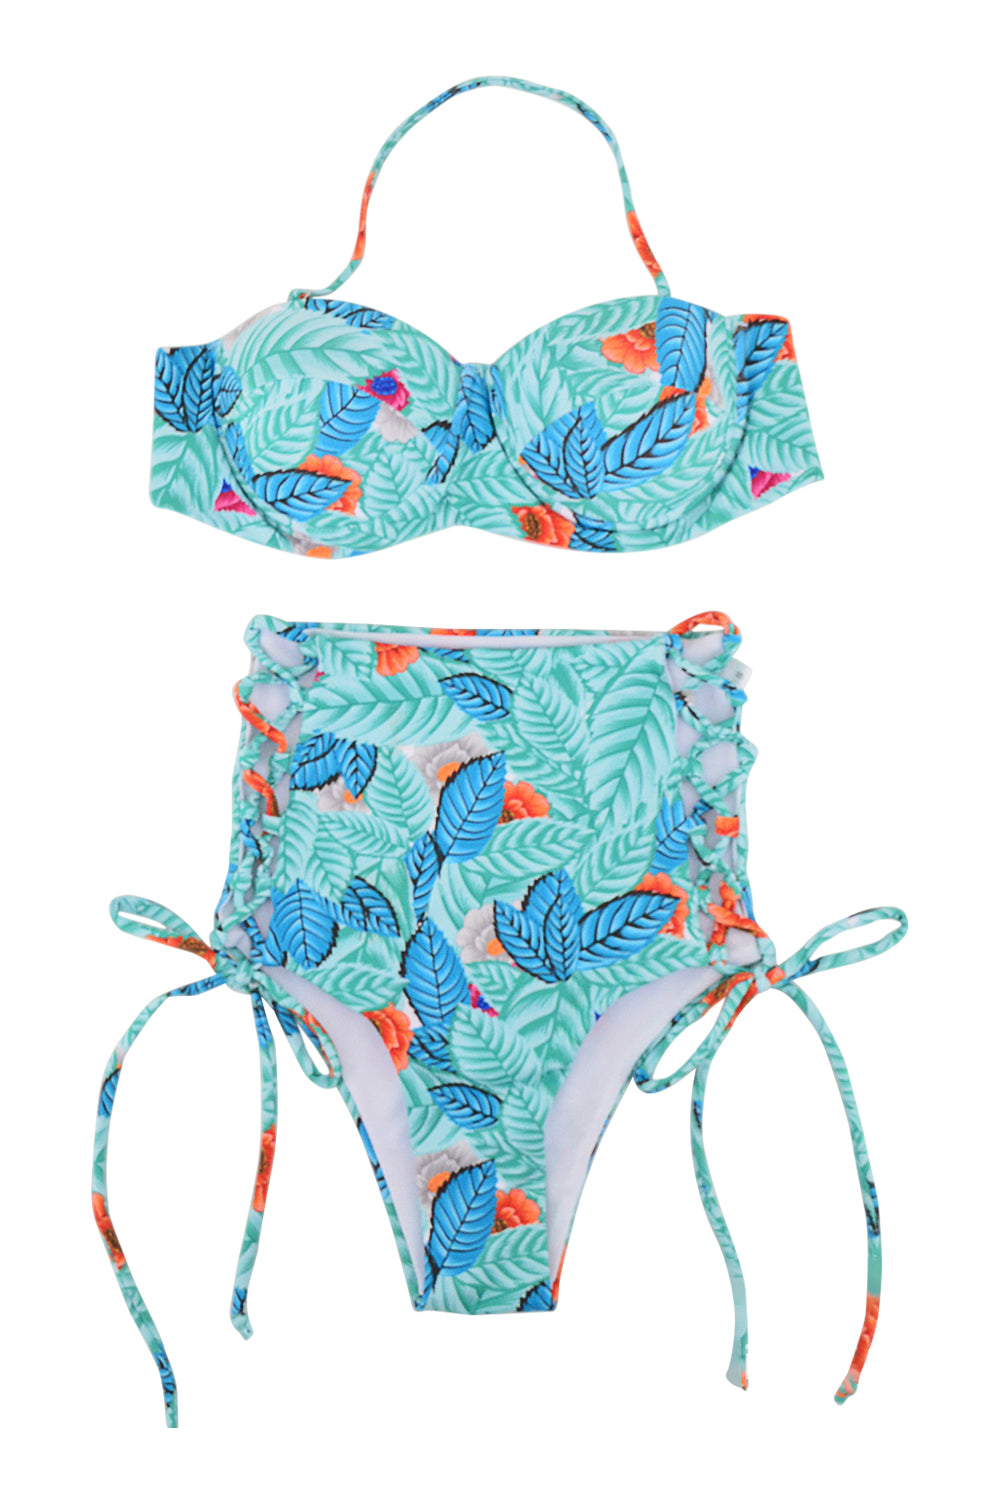 Iyasson Leaves Printing High-waisted fit Bikini Set